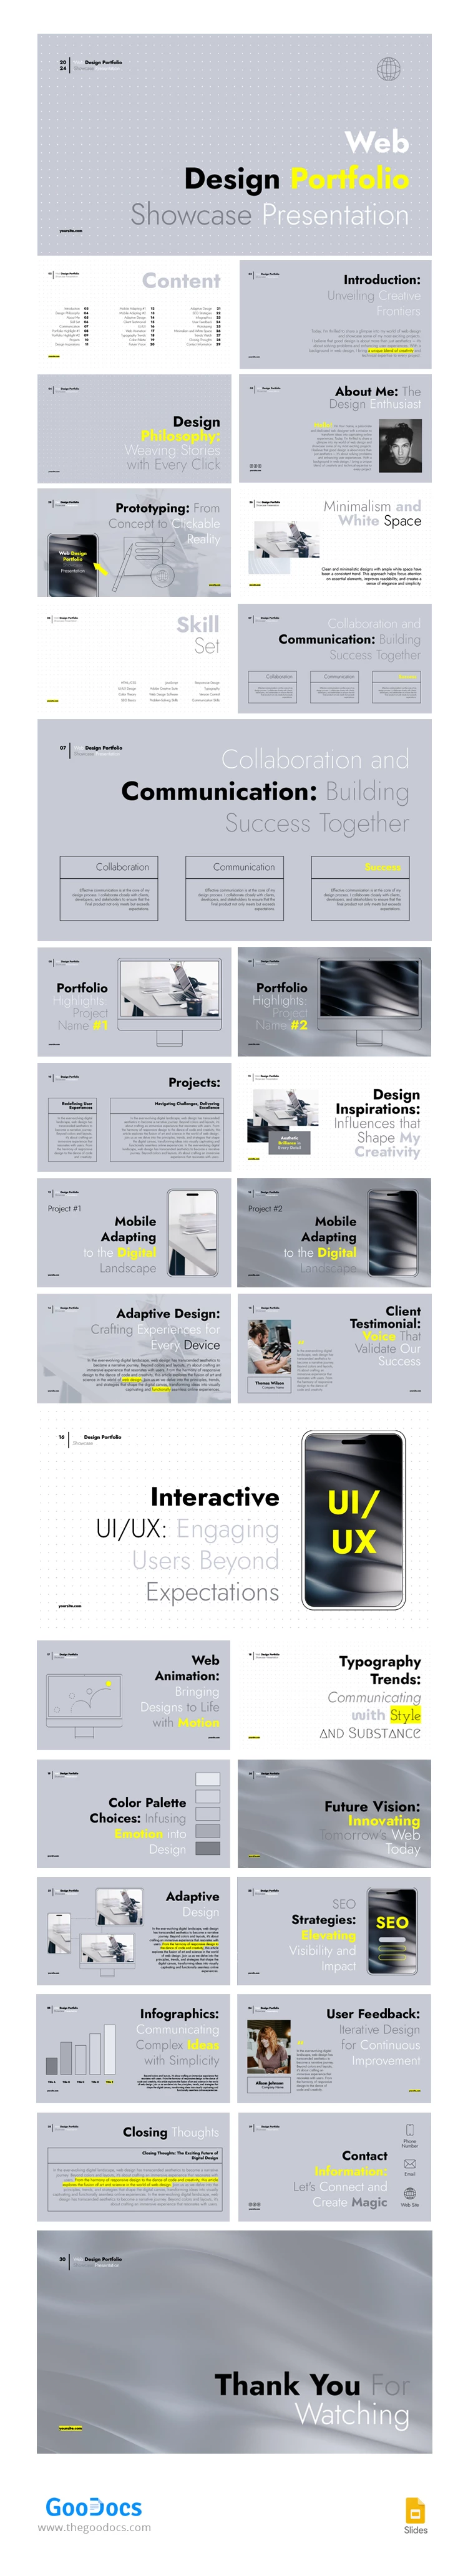 Web Design Portfolio Showcase - free Google Docs Template - 10067564